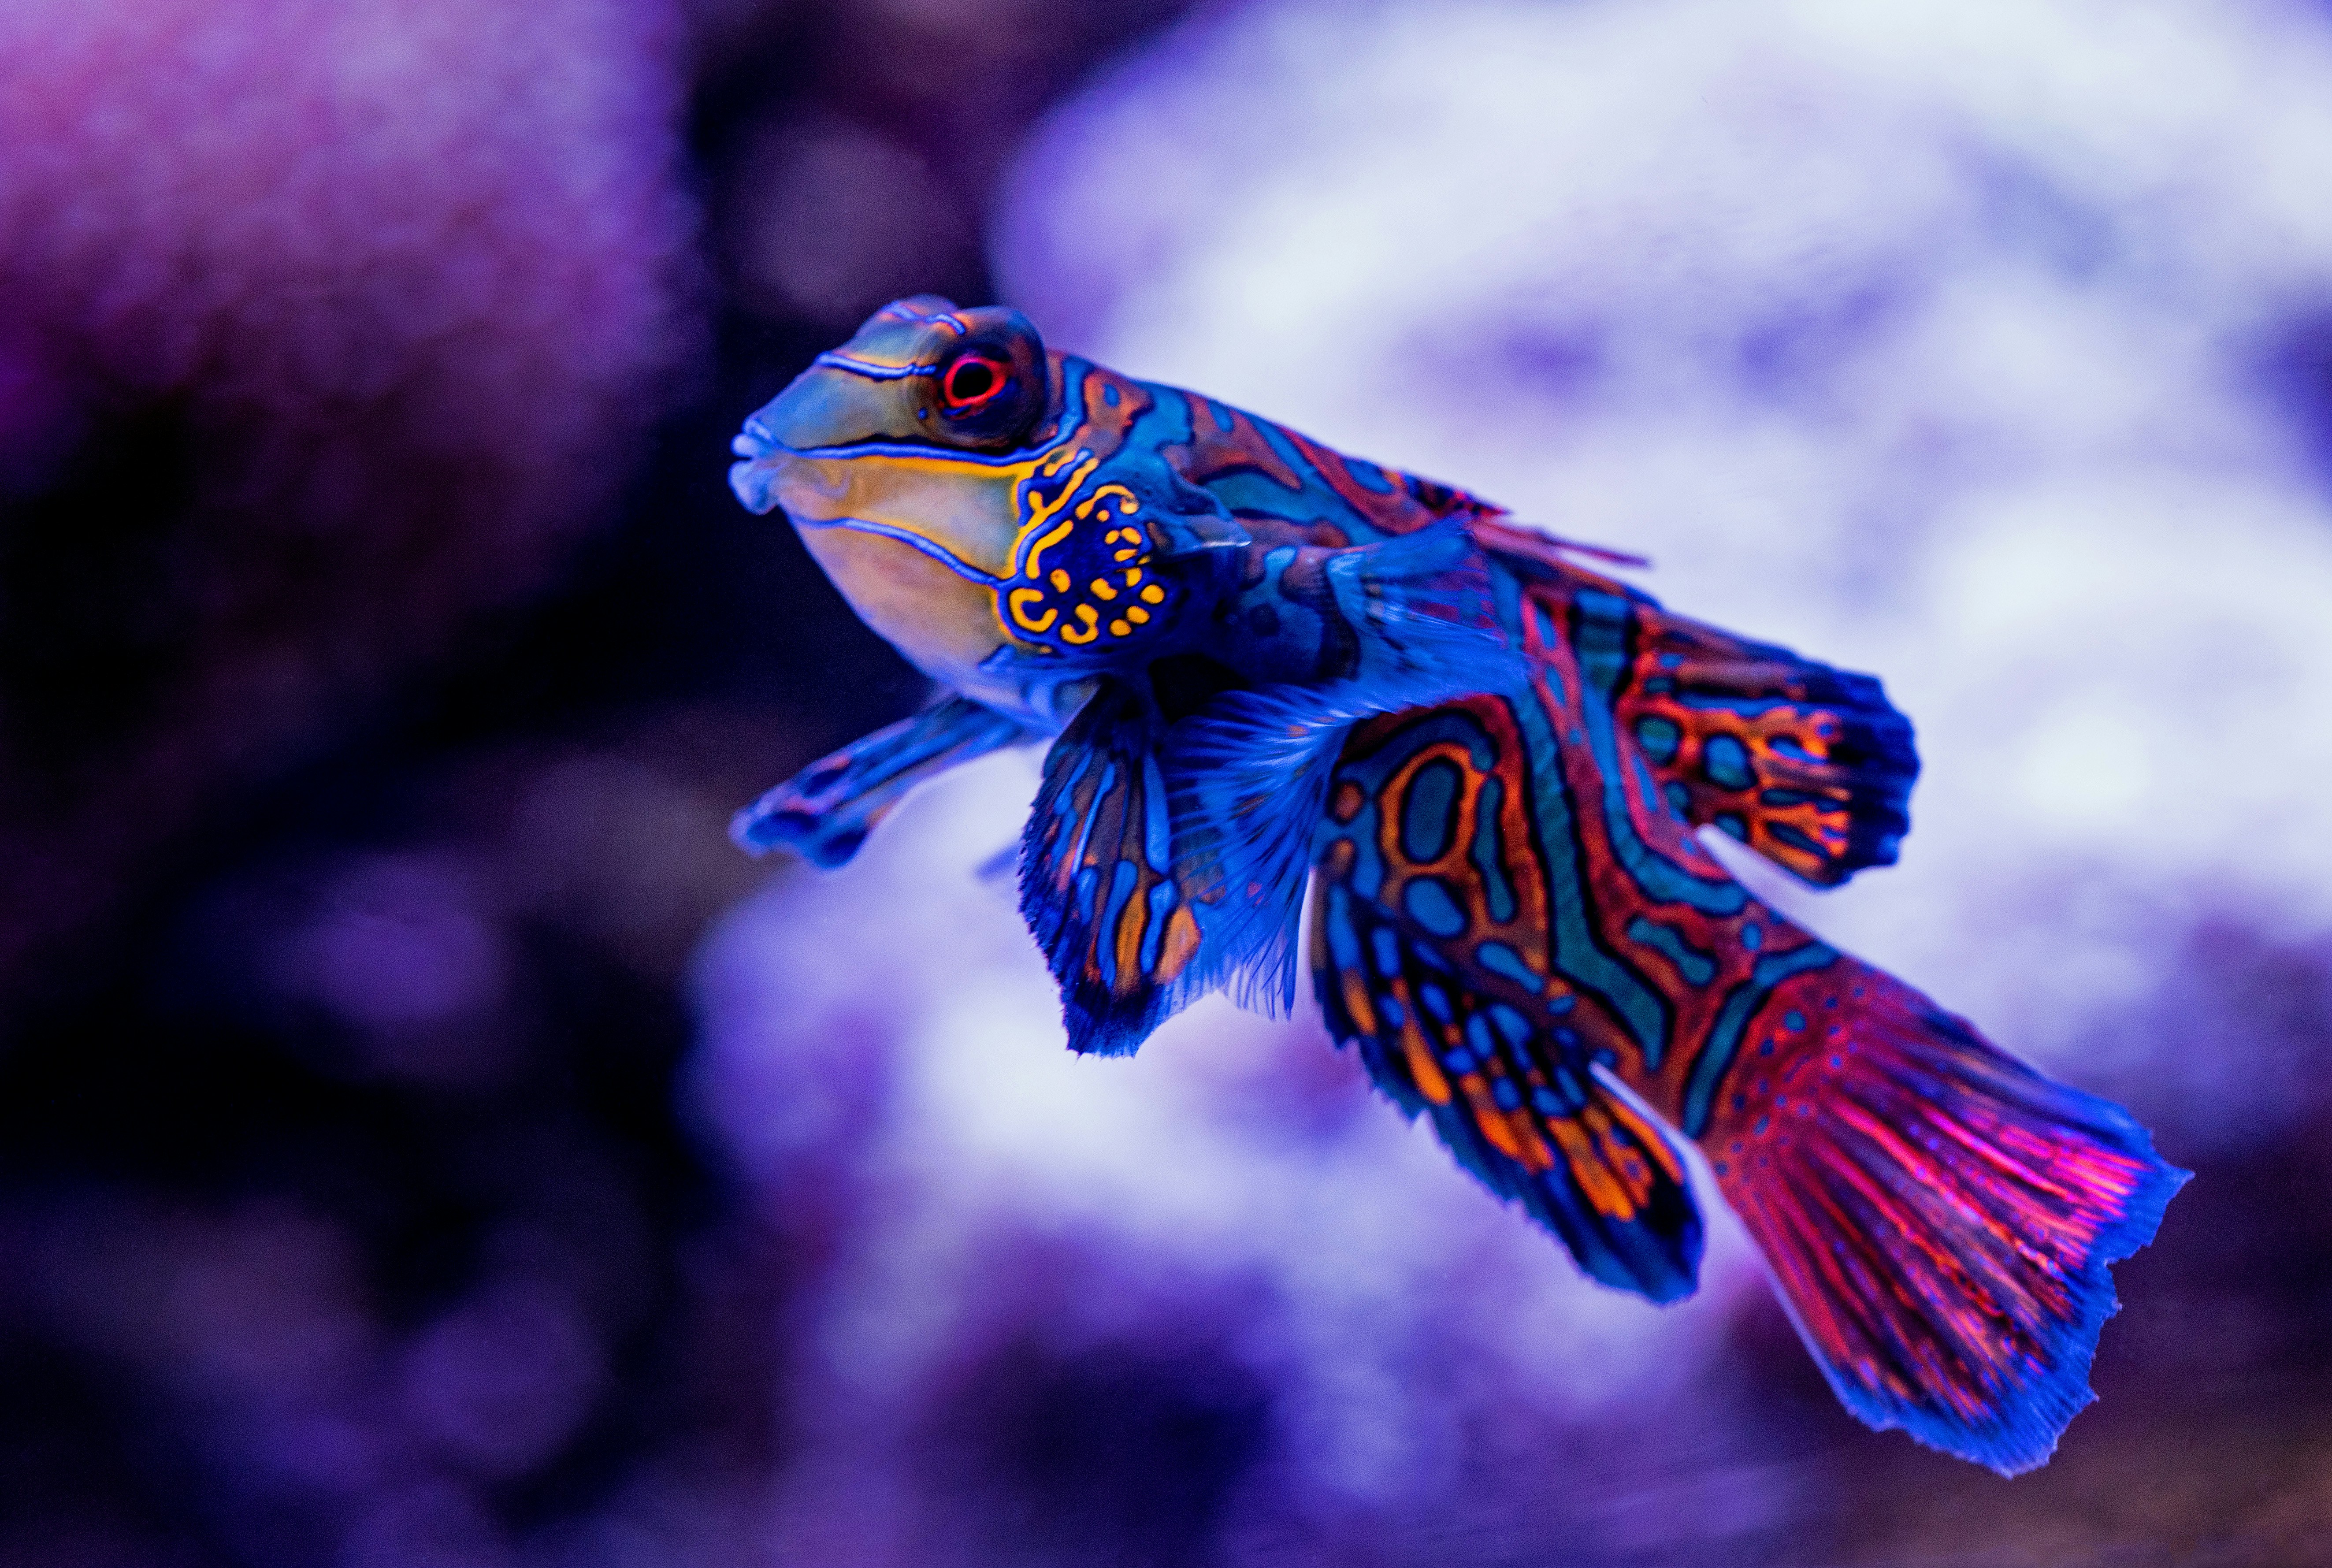 Photo by David Clode on Unsplash Mandarin fish